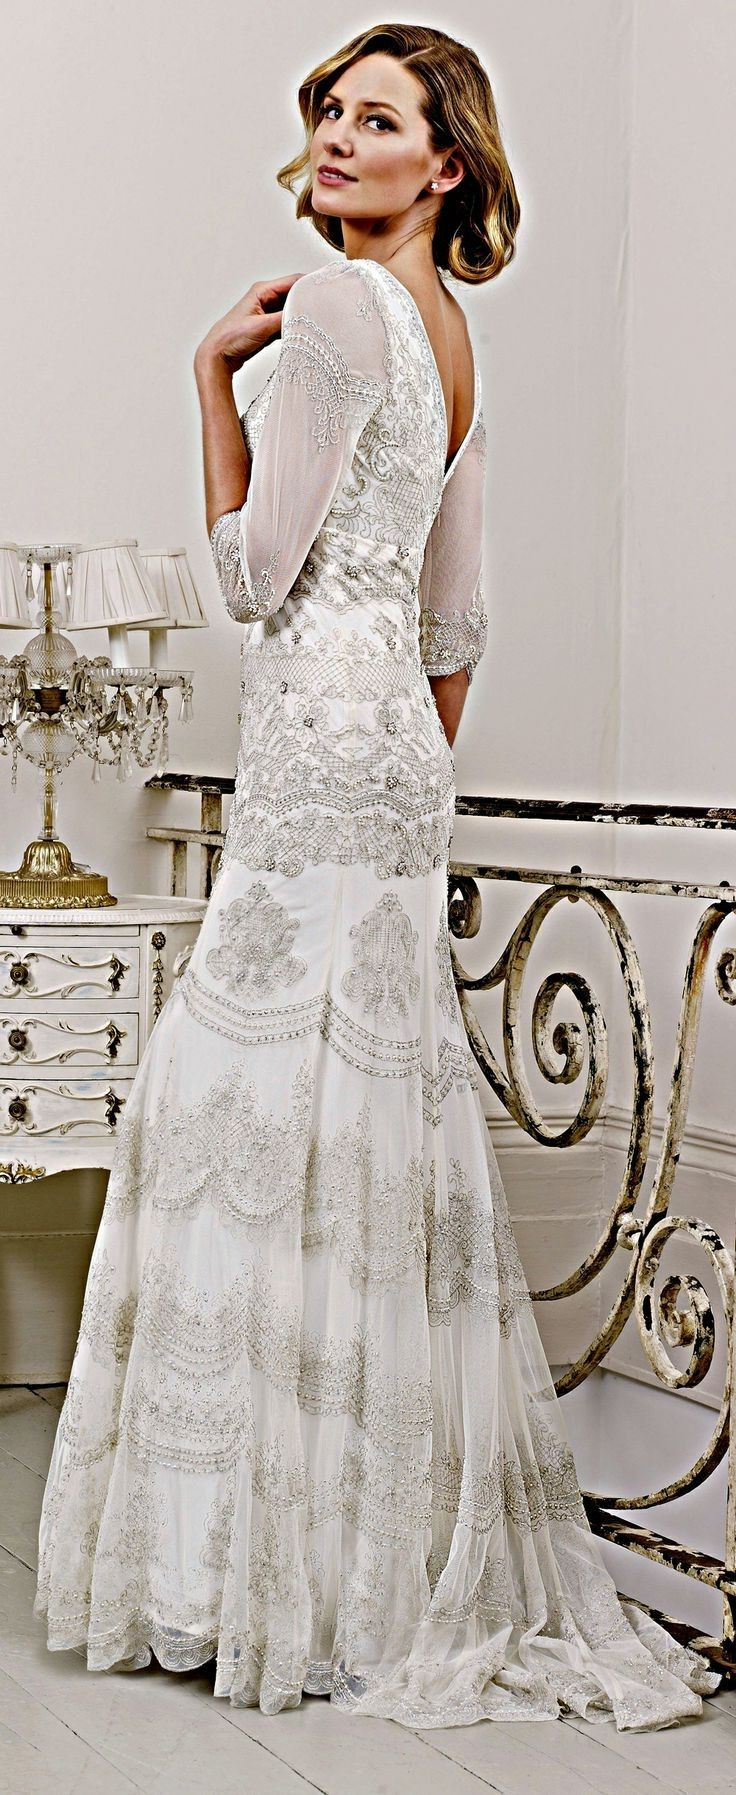 2nd Wedding Dresses
 Best 25 Second wedding dresses ideas on Pinterest